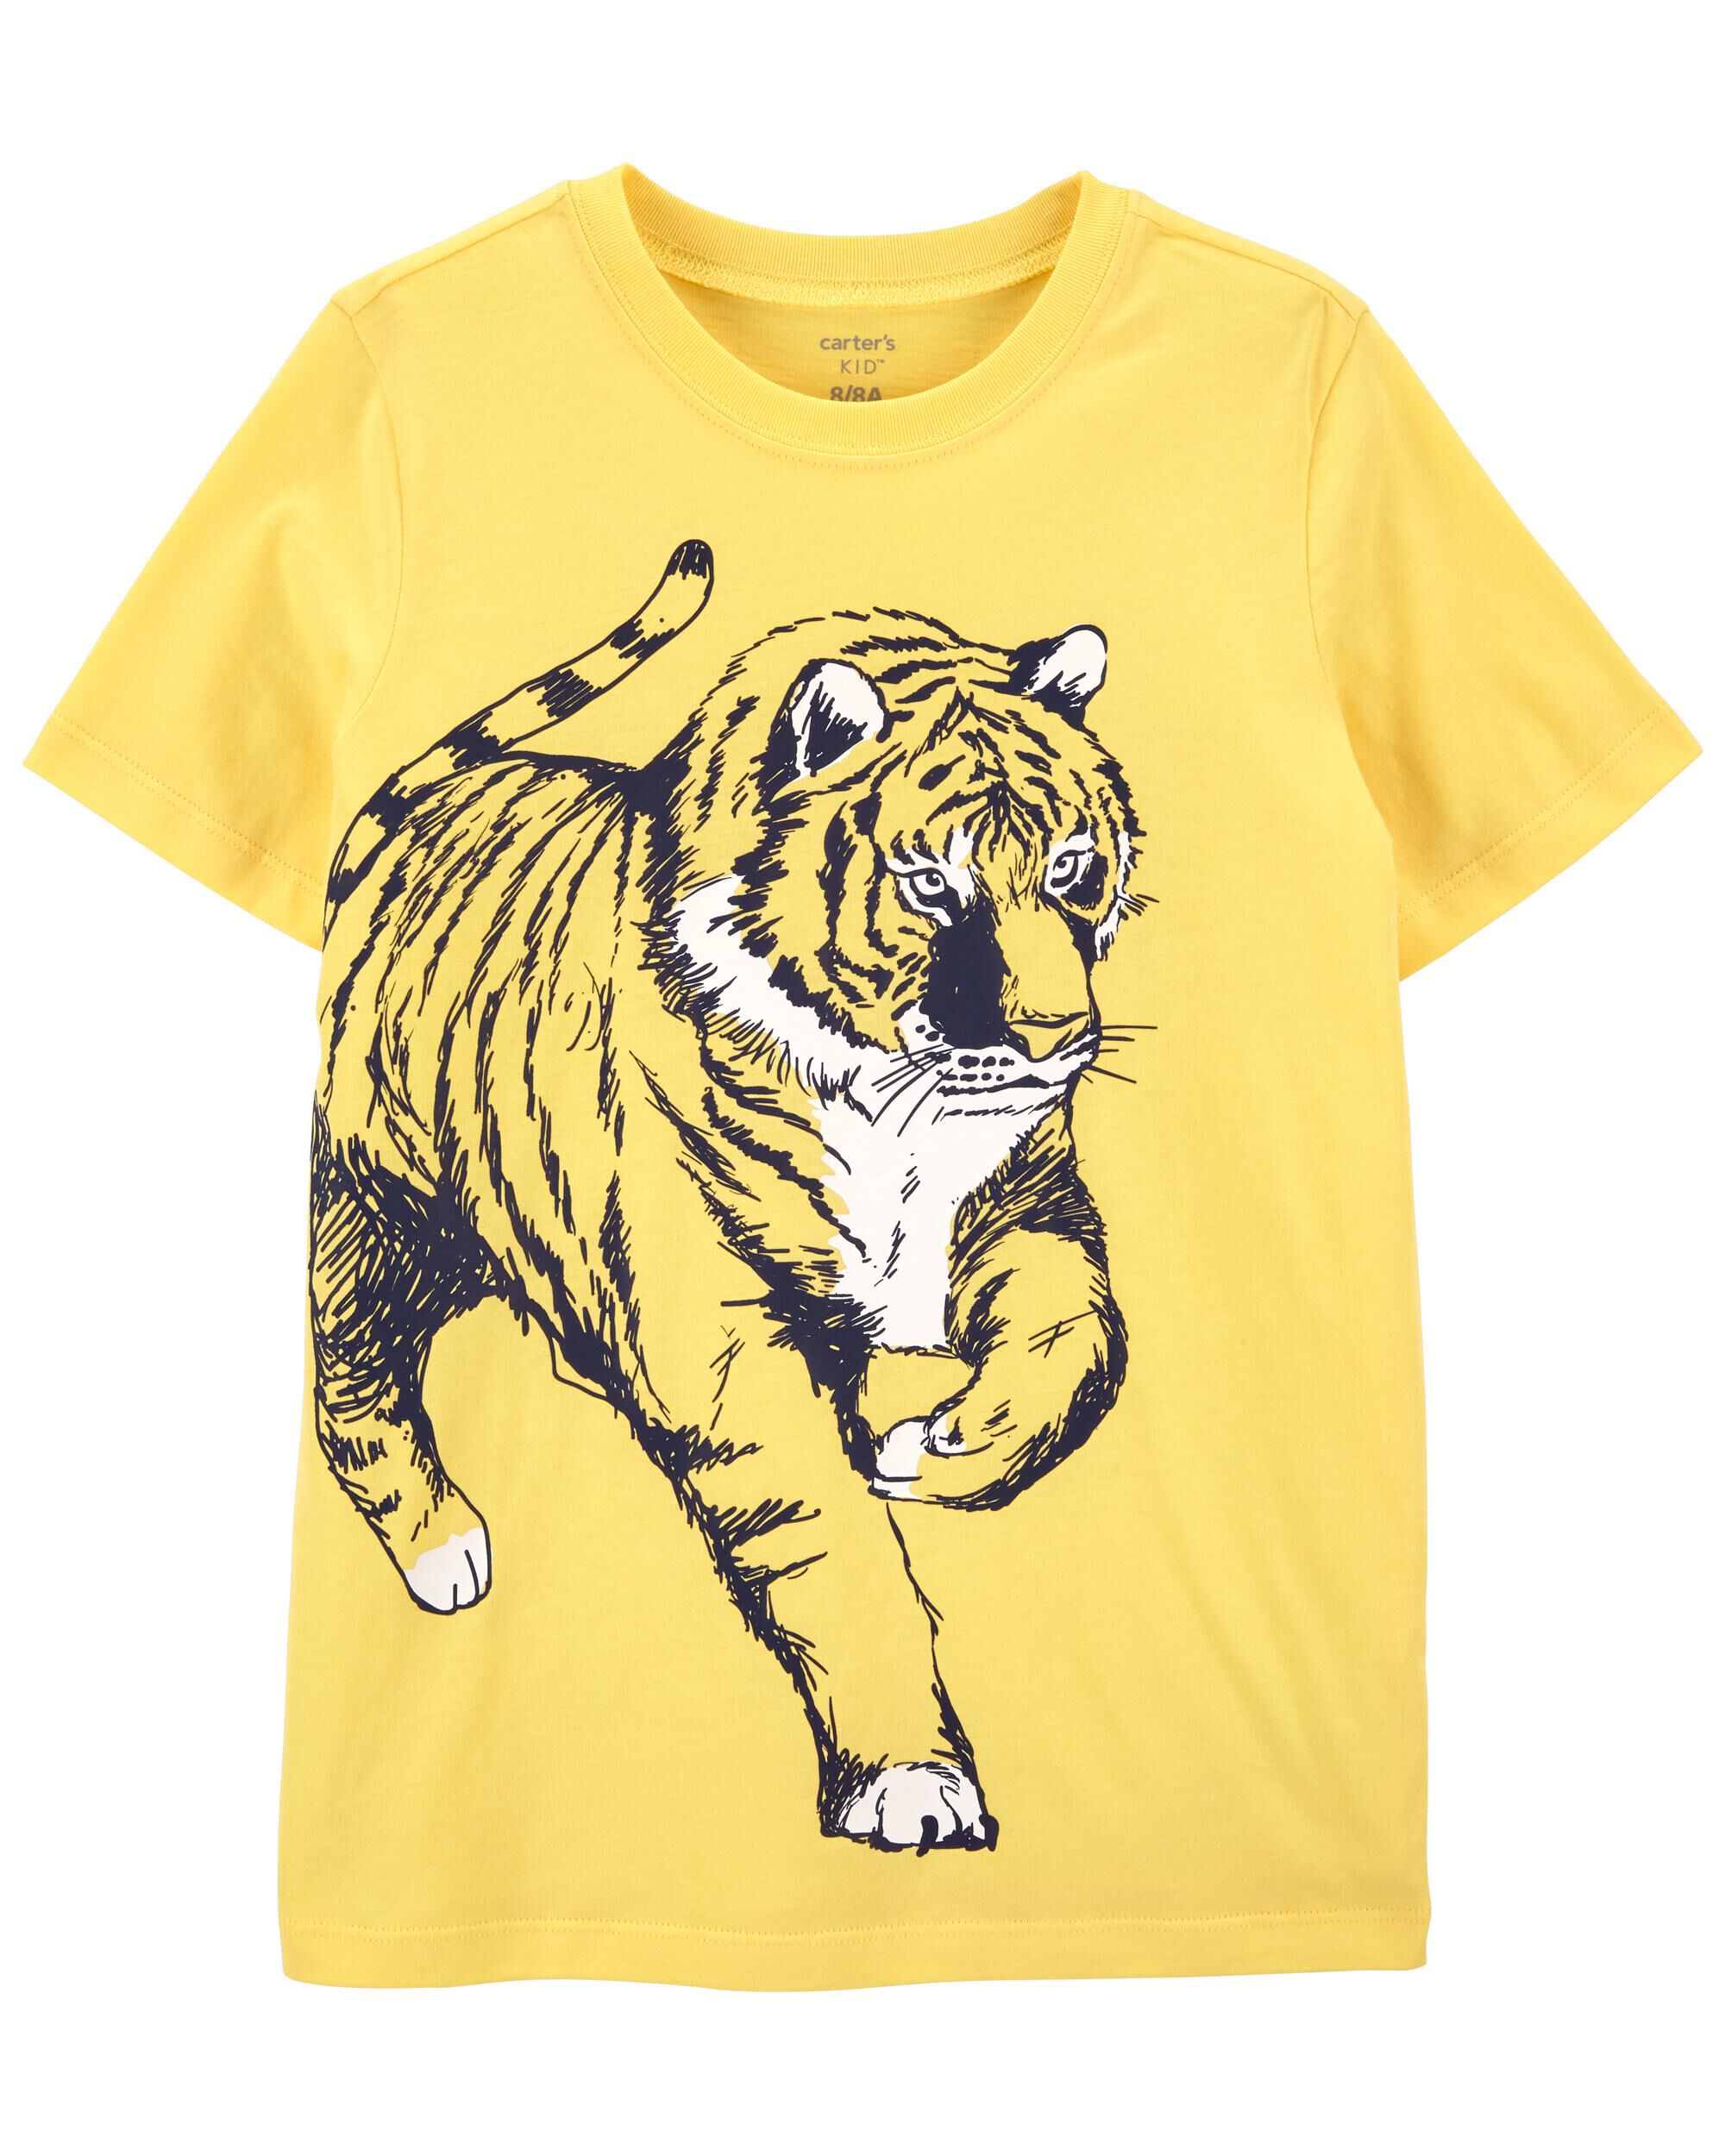 NWT Carter's Boys Tiger Tee Shirt Yellow many sizes 12,14 